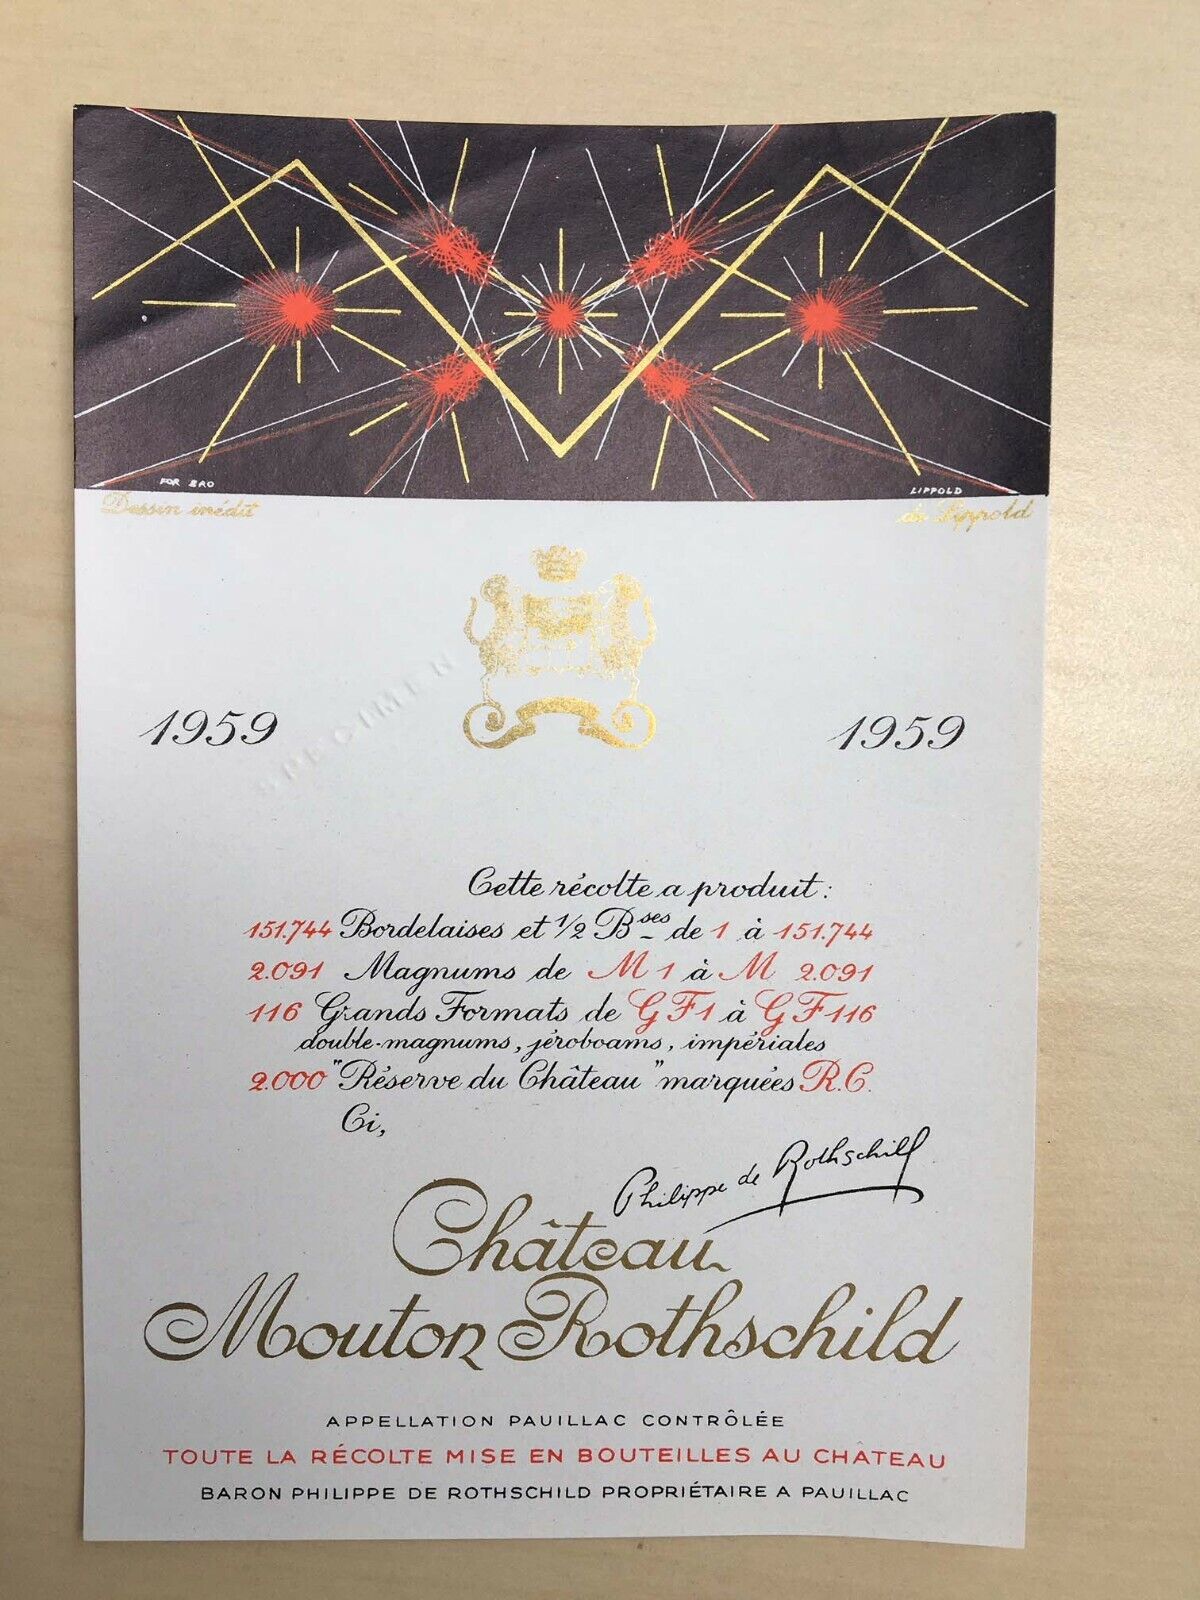 The 1959 Chateau Mouton Rothschild (Specimen) - Label By: Richard Lippold